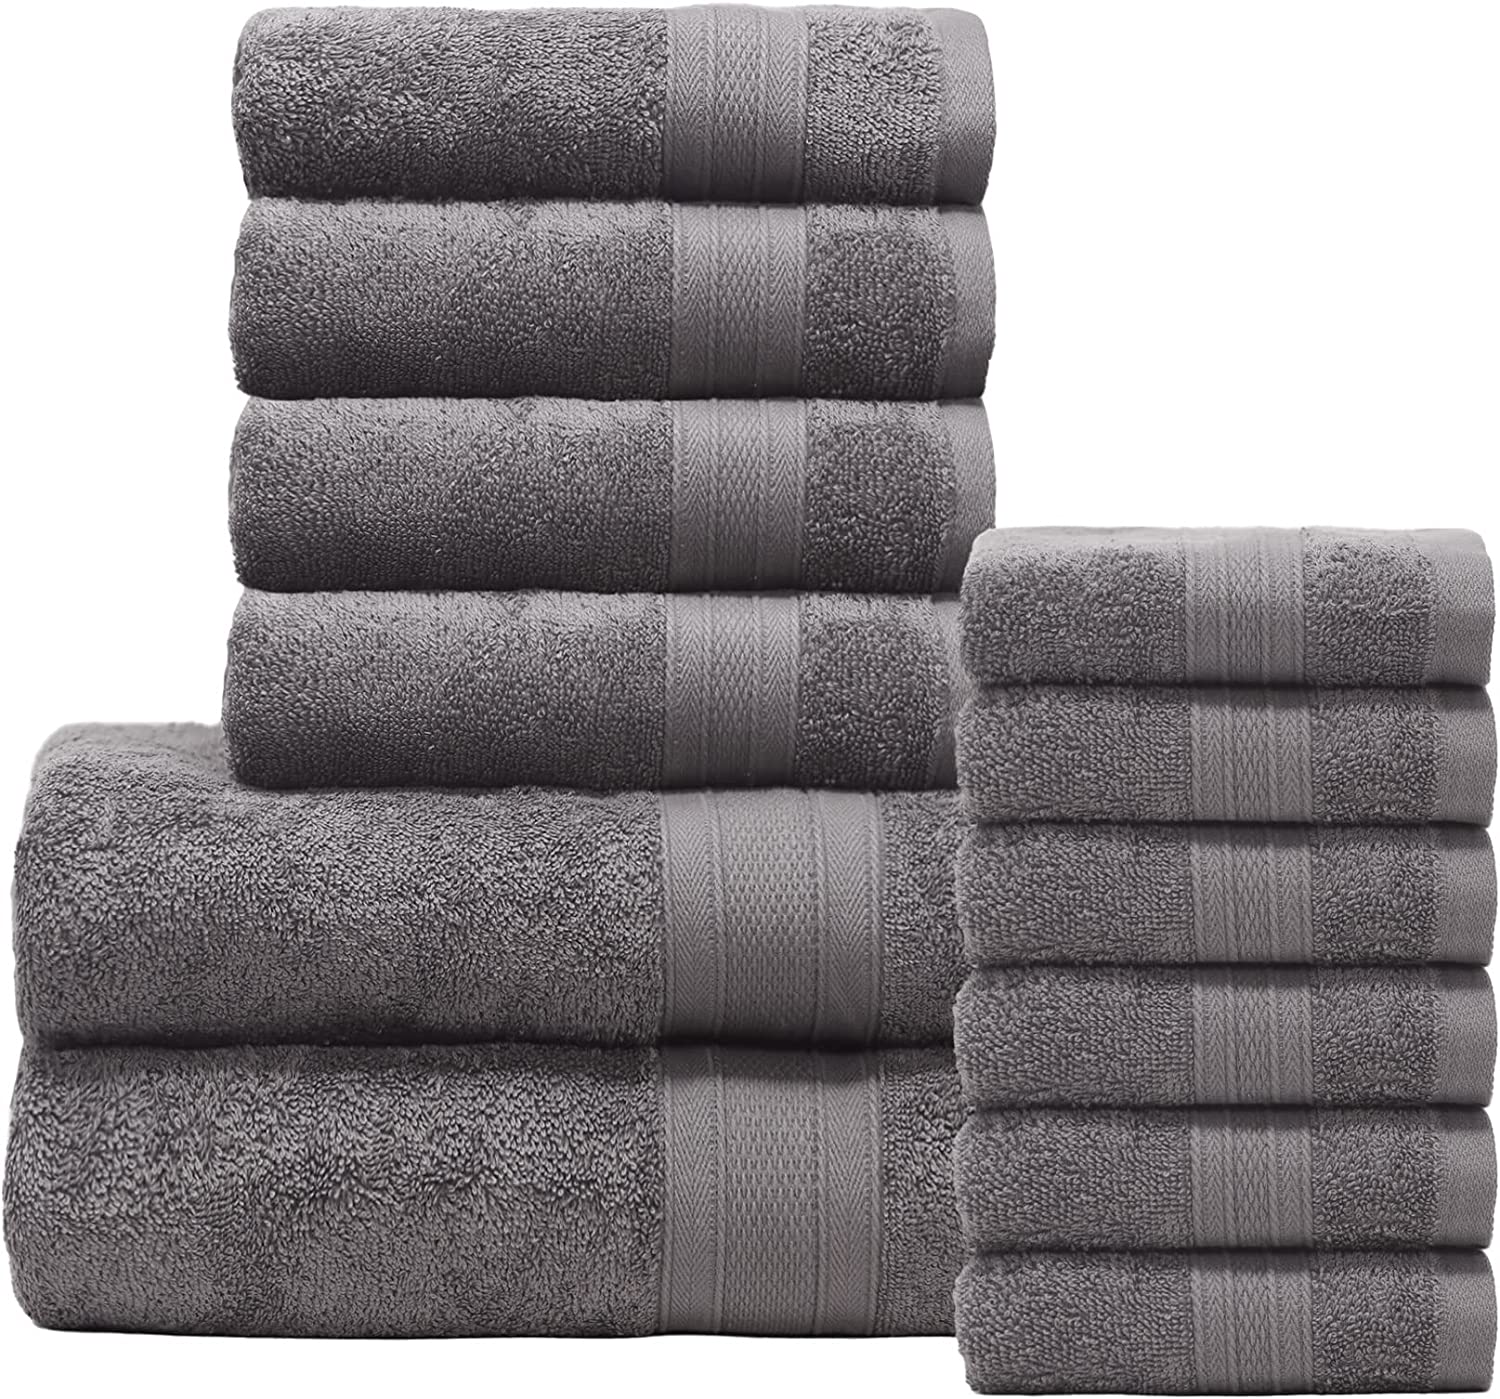 Trident Soft N Plush 6 Piece Cotton Bath Towel Set, Charcoal Gray 